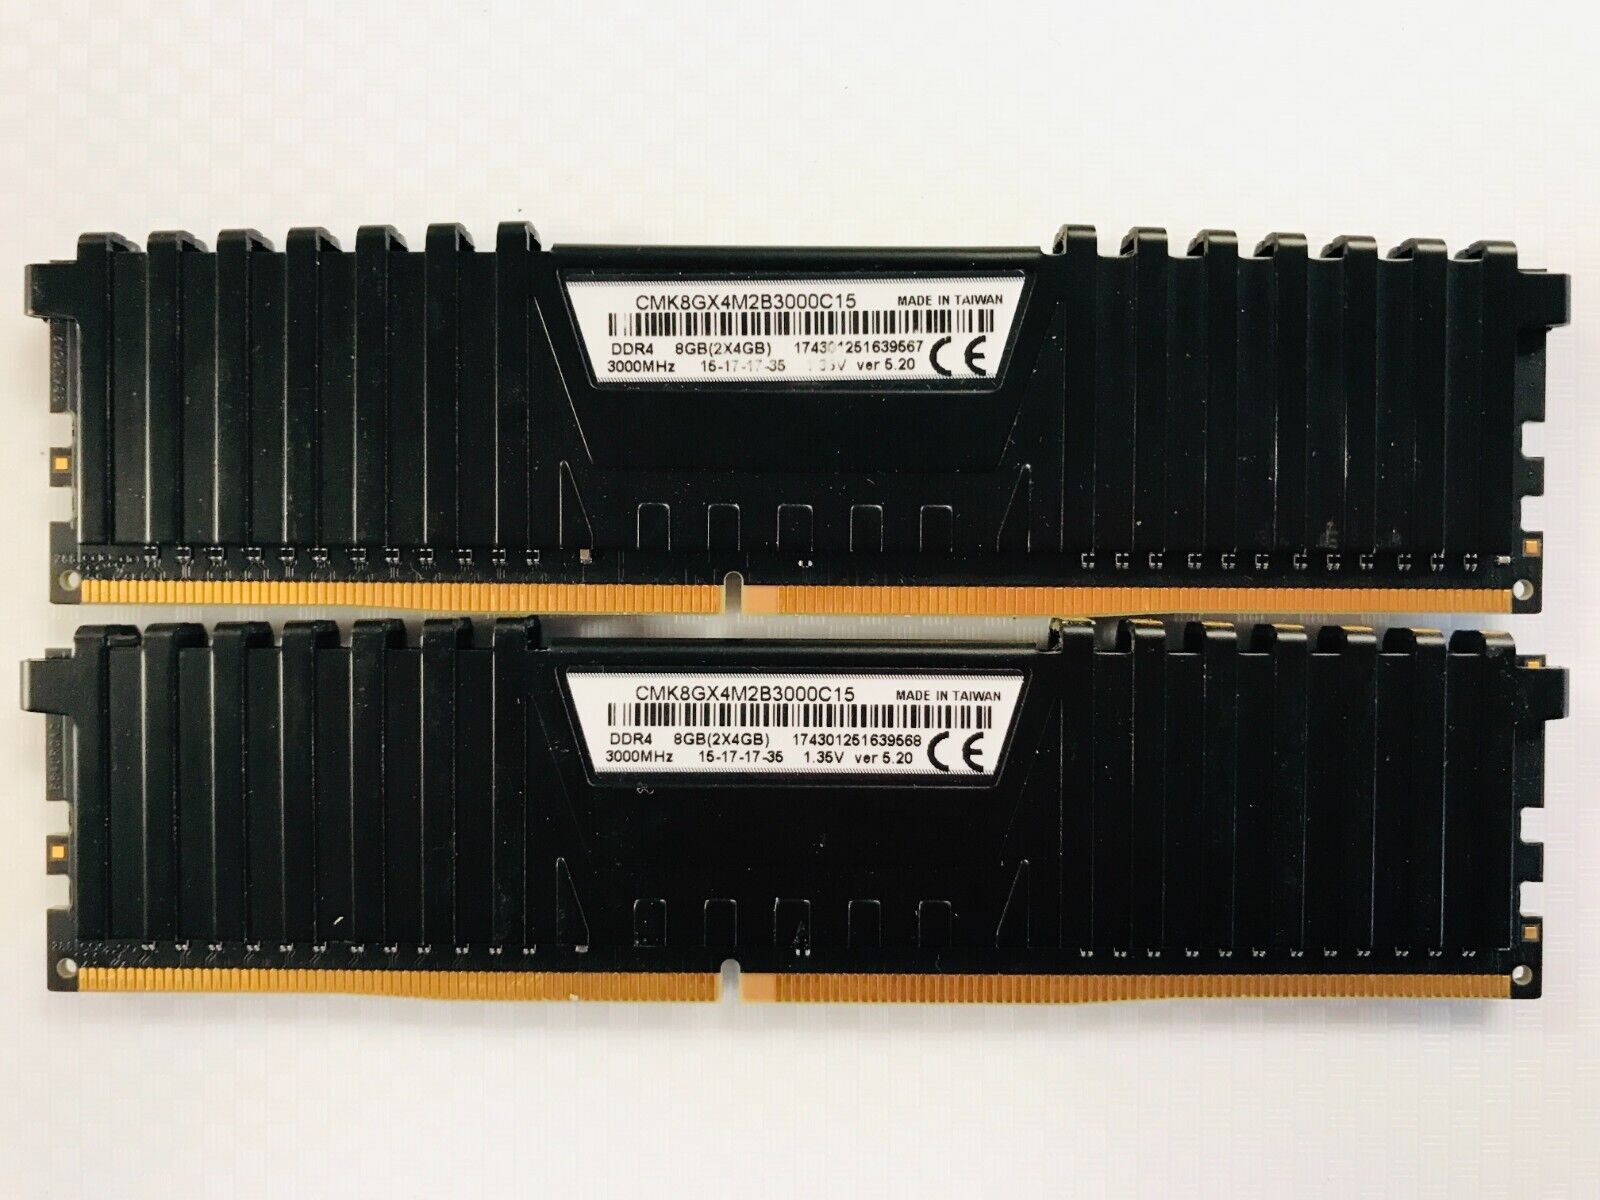 Corsair Vengeance LPX 8GB (4GBx2) DDR4 3000MHz RAM (CMK8GX4M2B3000C15)